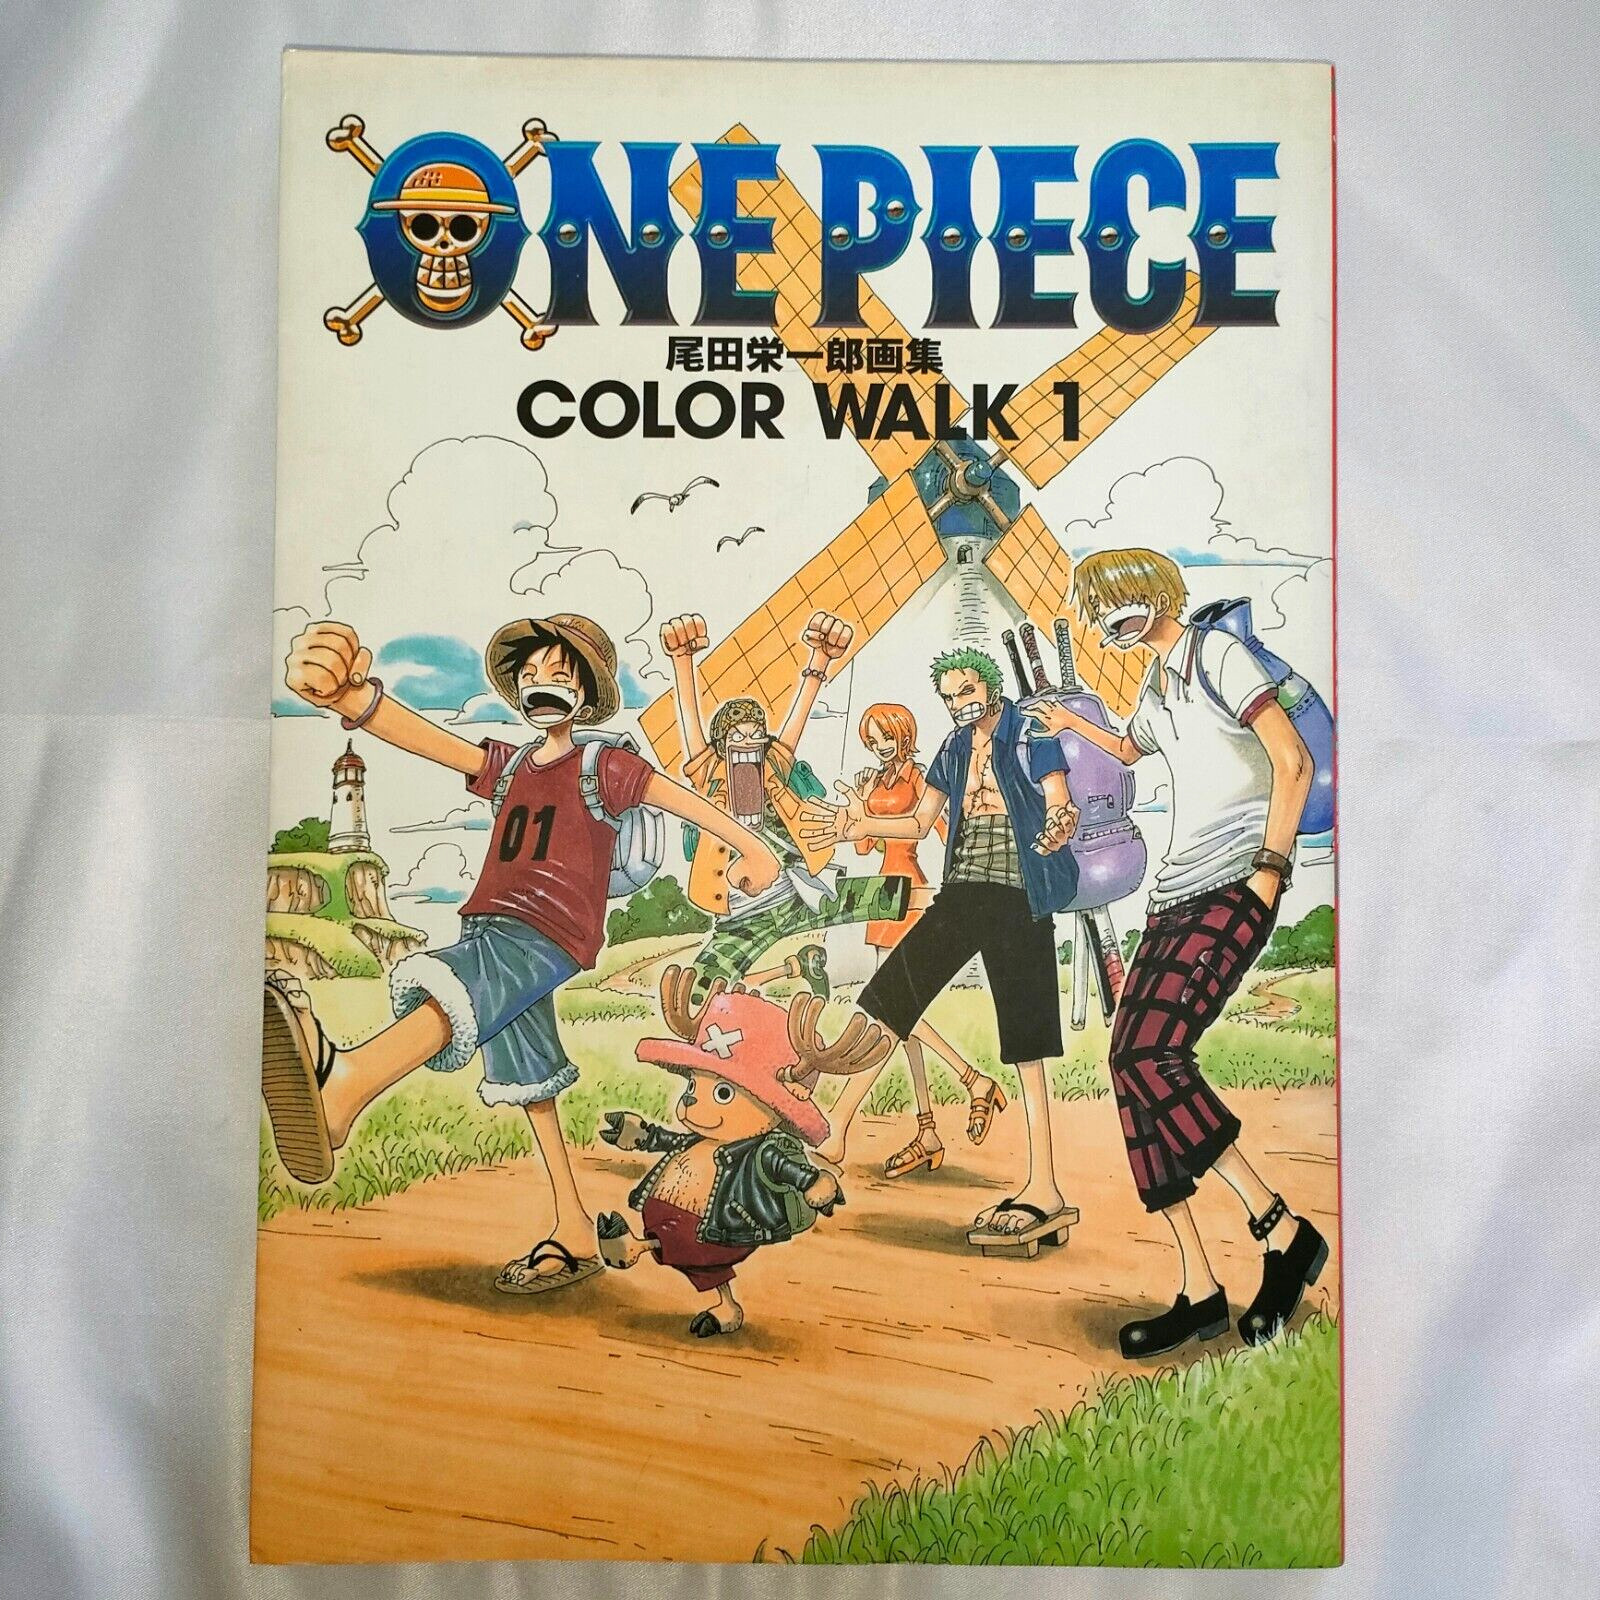 ONE PIECE COLOR WALK #1 Eiichiro Oda Illustration Art Book Manga Anime Japanese